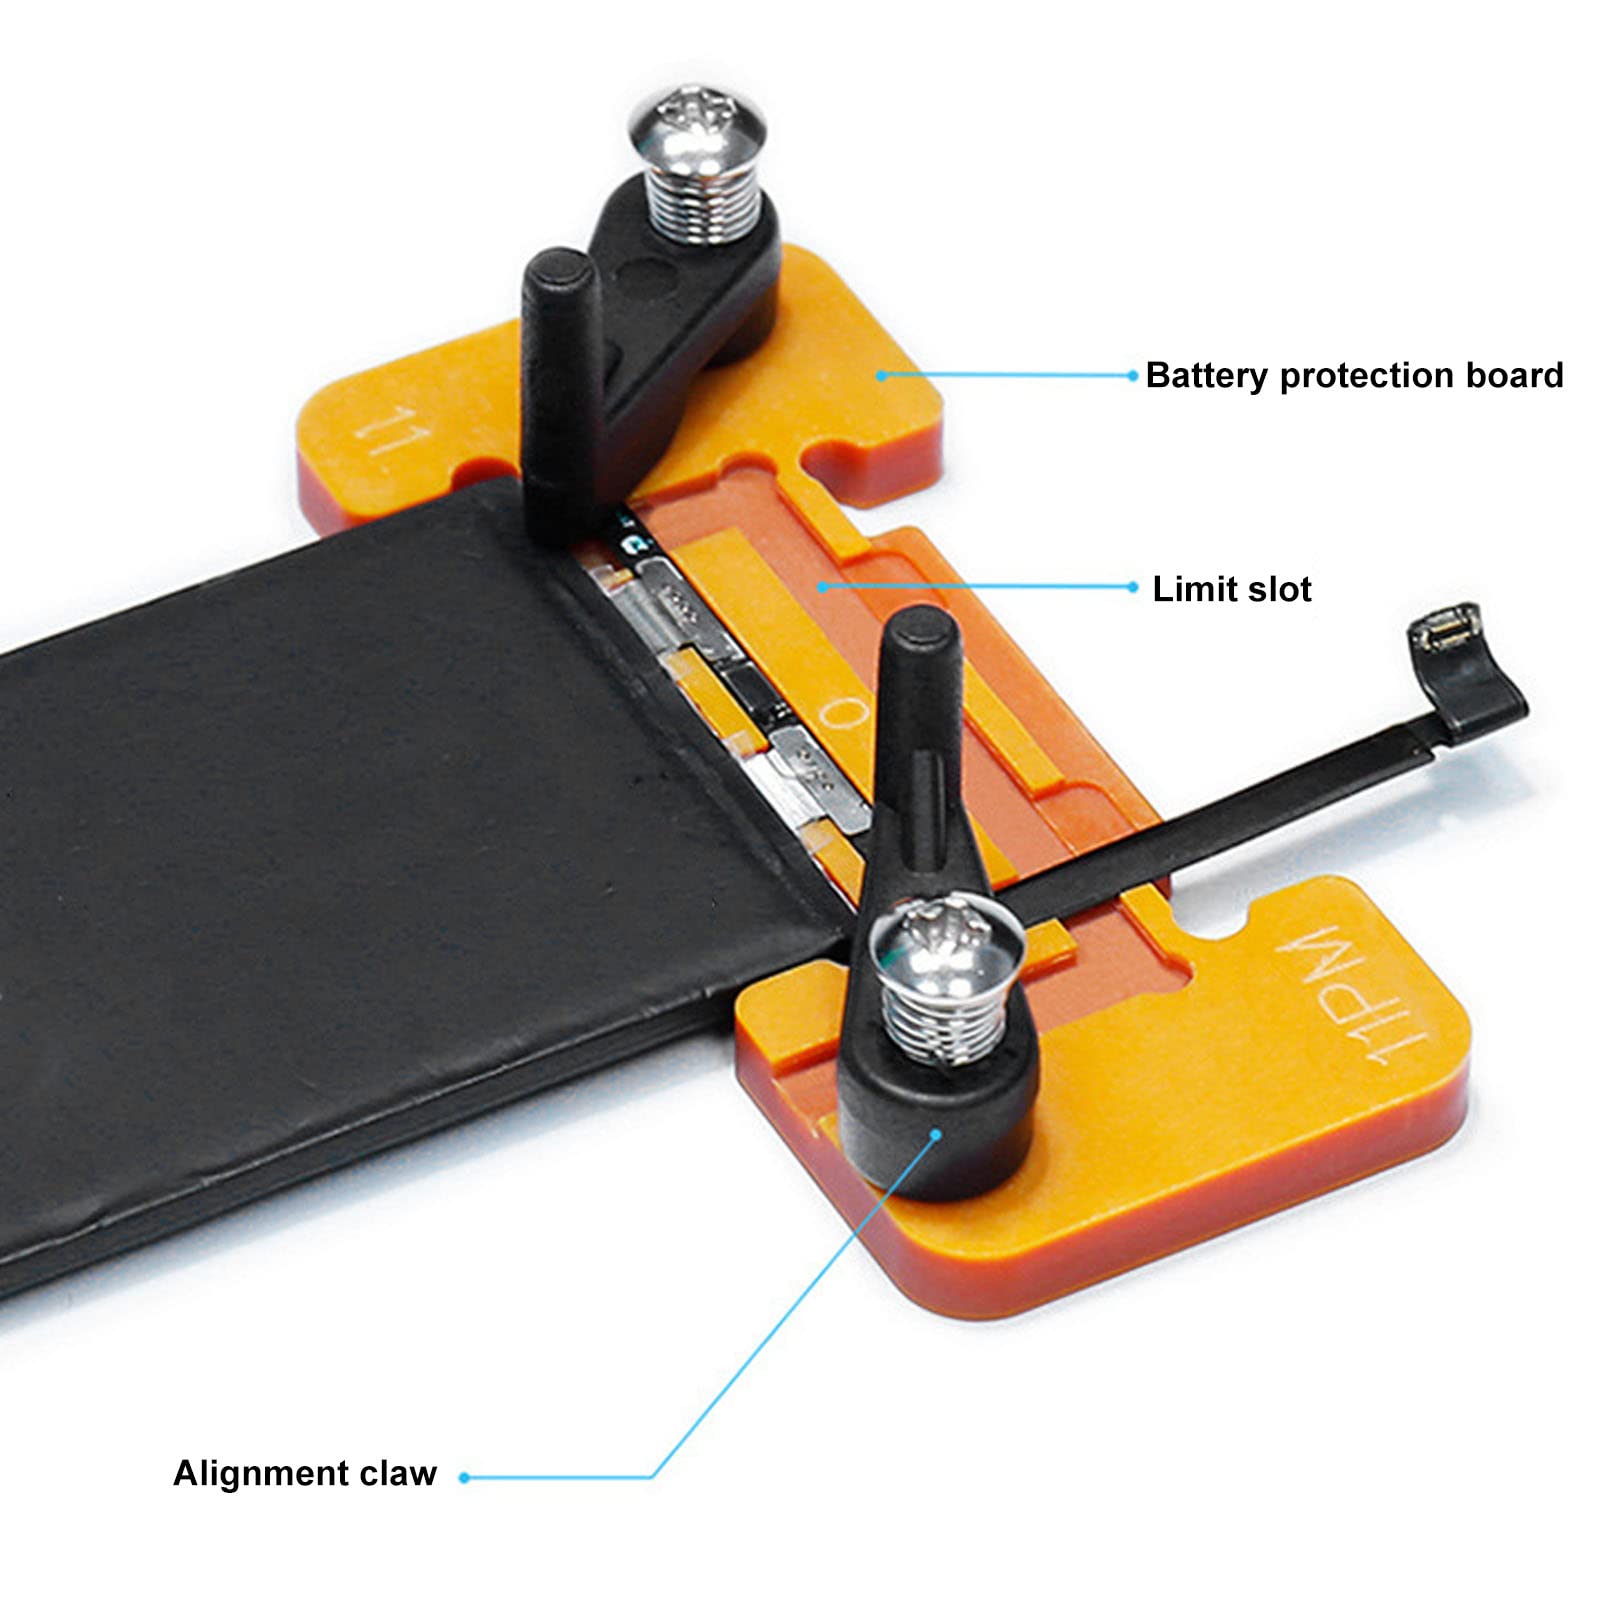 Portable Spot Welding Machine, Rust Proof LCD Screen Mini Spot Welder Kit Ultra Low Internal Resistance Labor Saving for Batteries